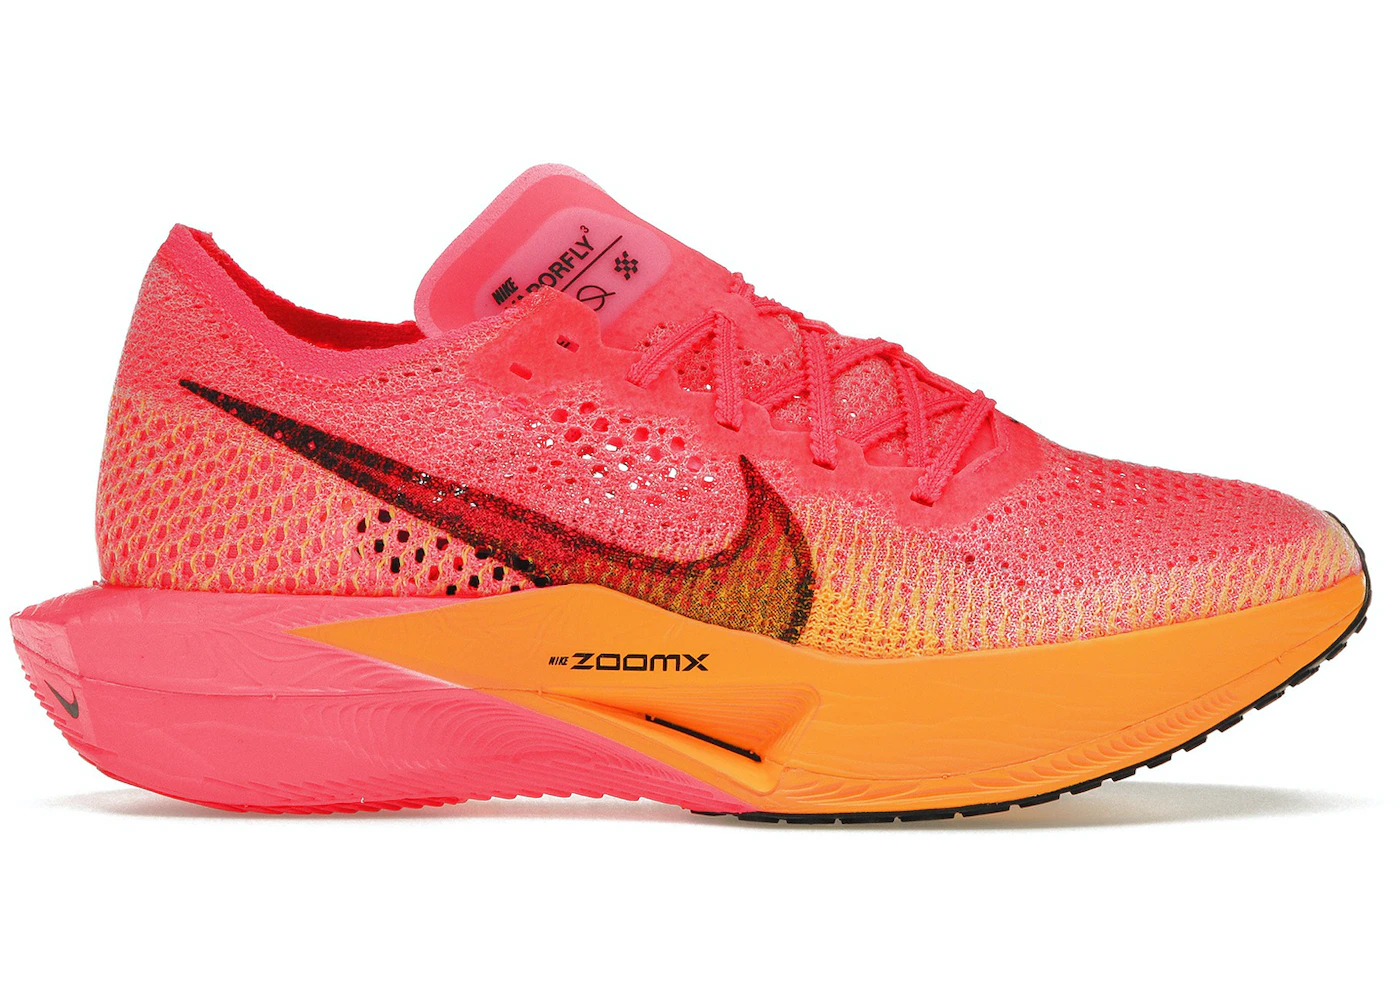 Nike ZoomX Vaporfly 3 Hyper Pink Laser Orange (Women's) - DV4130-600 - US